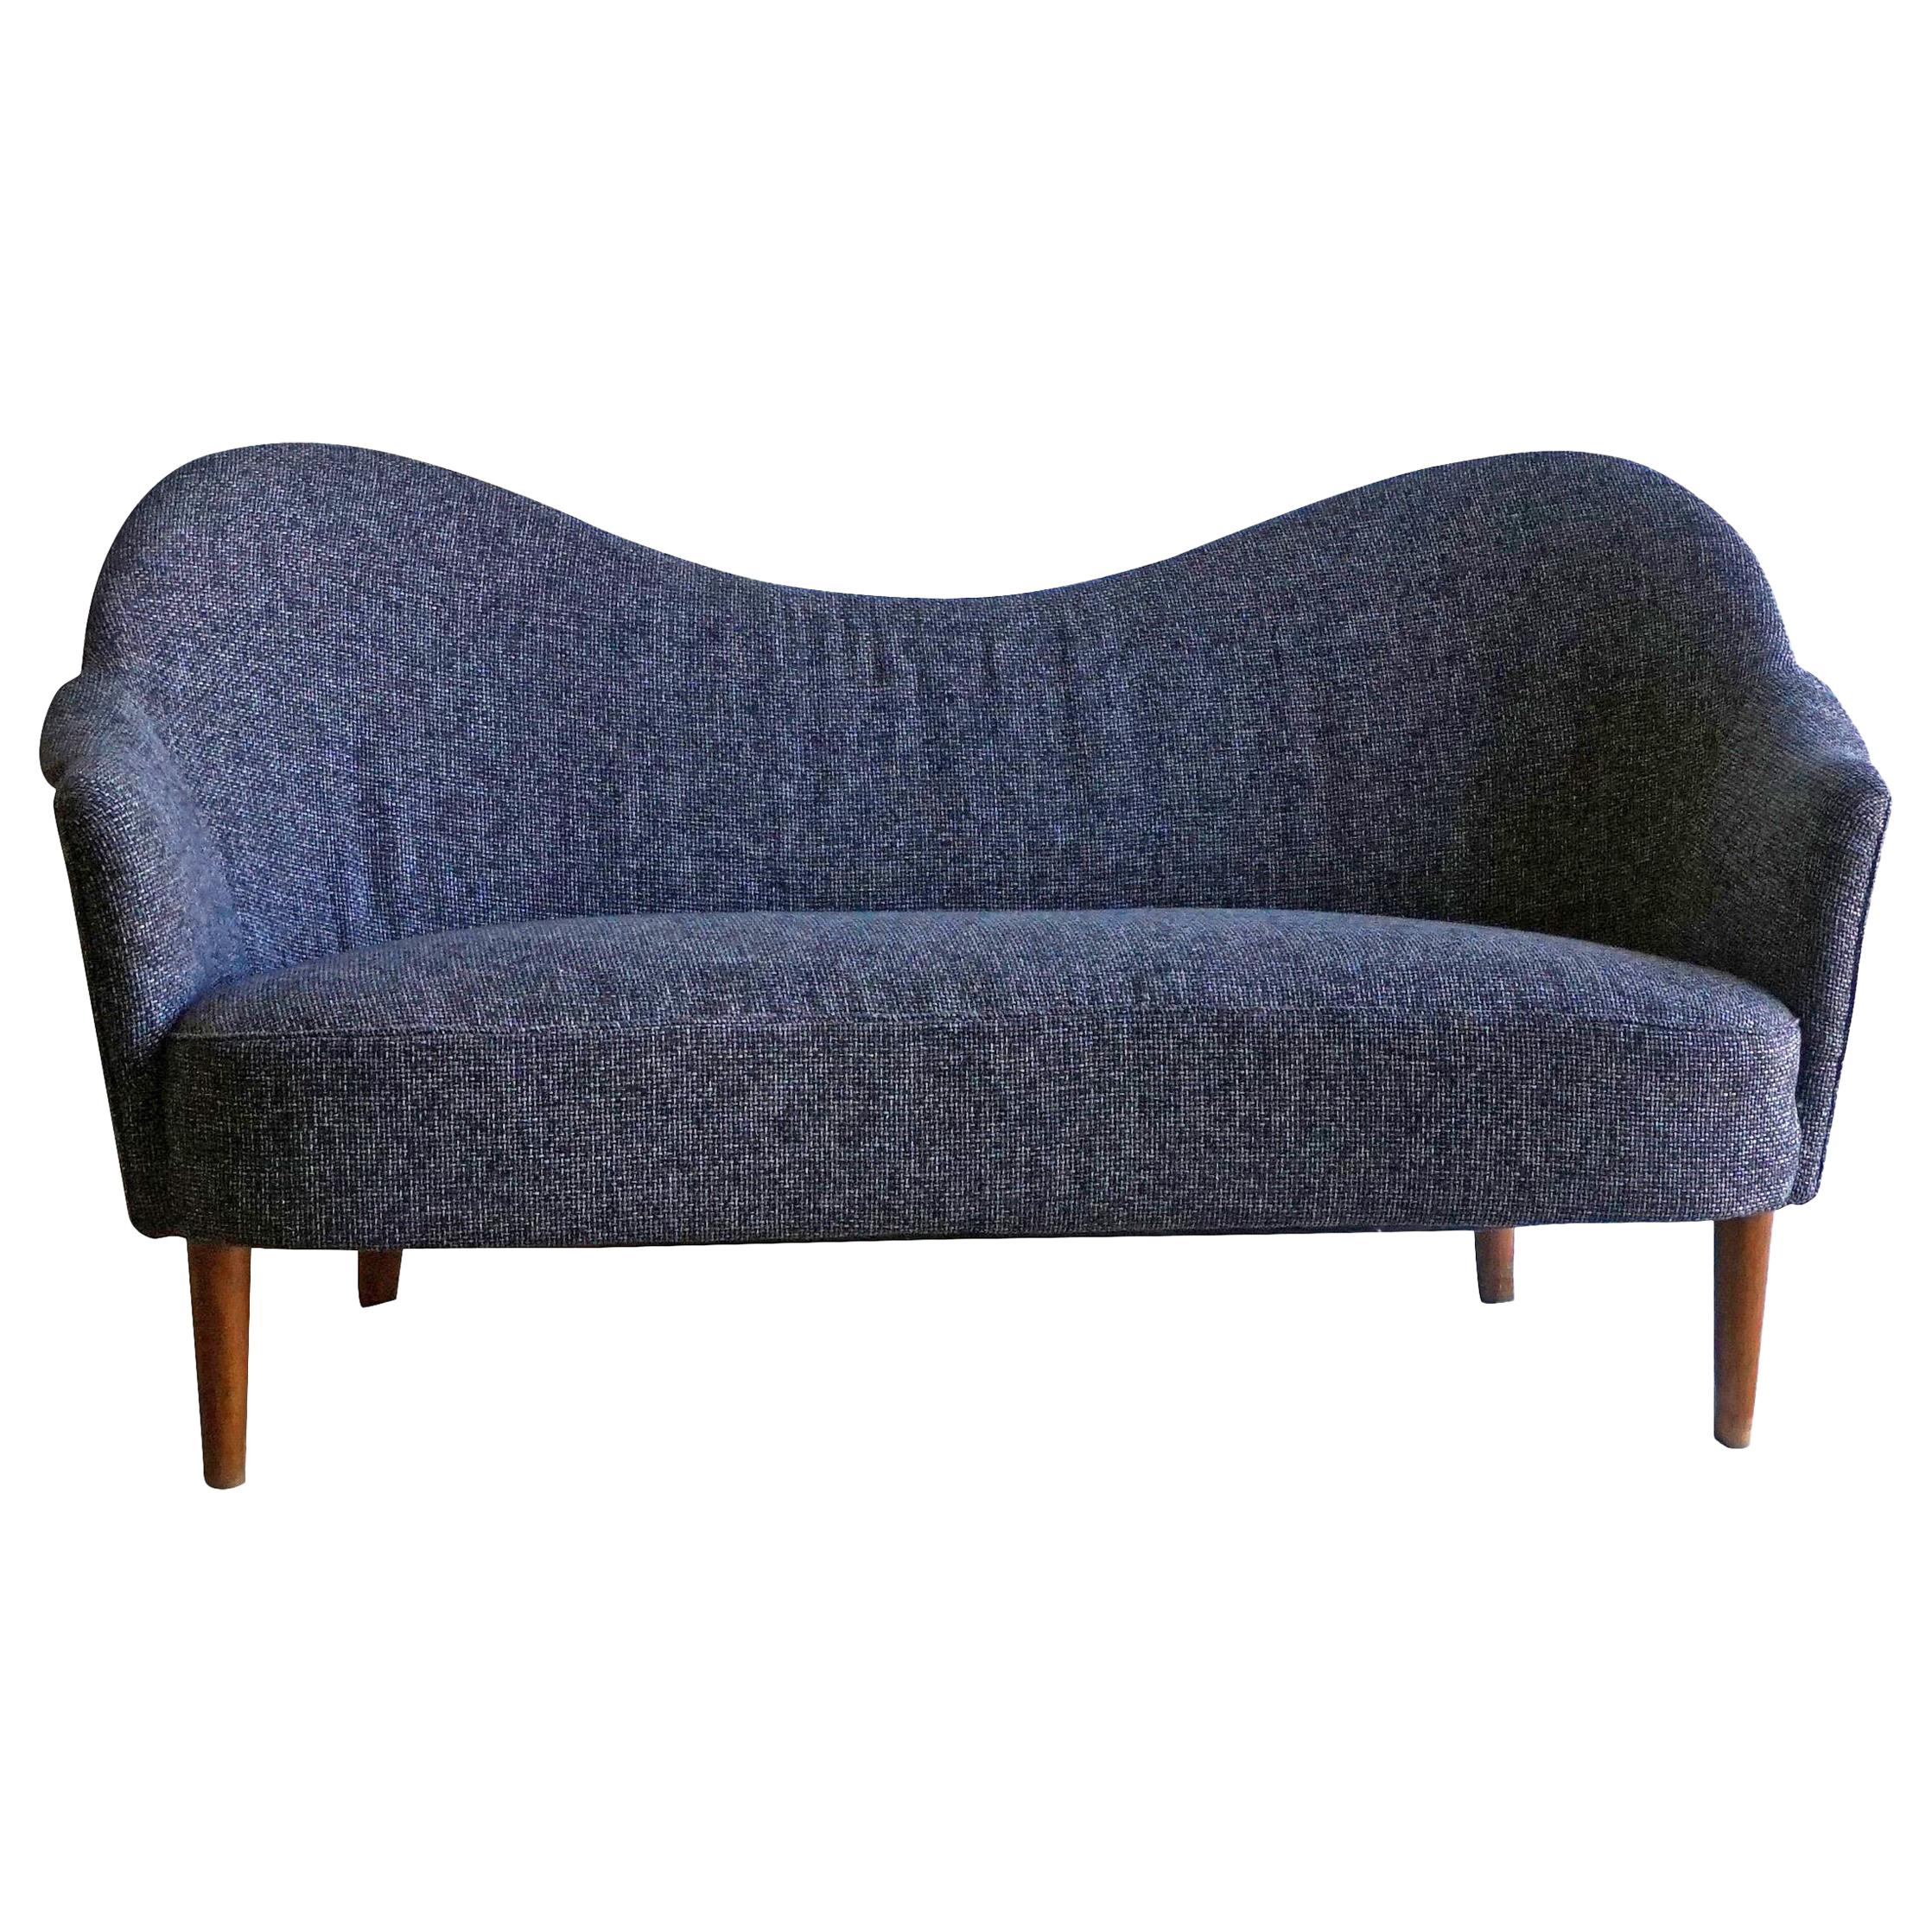 20th Century Grey Samspel Sofa by Carl Malmsten, Swedish Settee